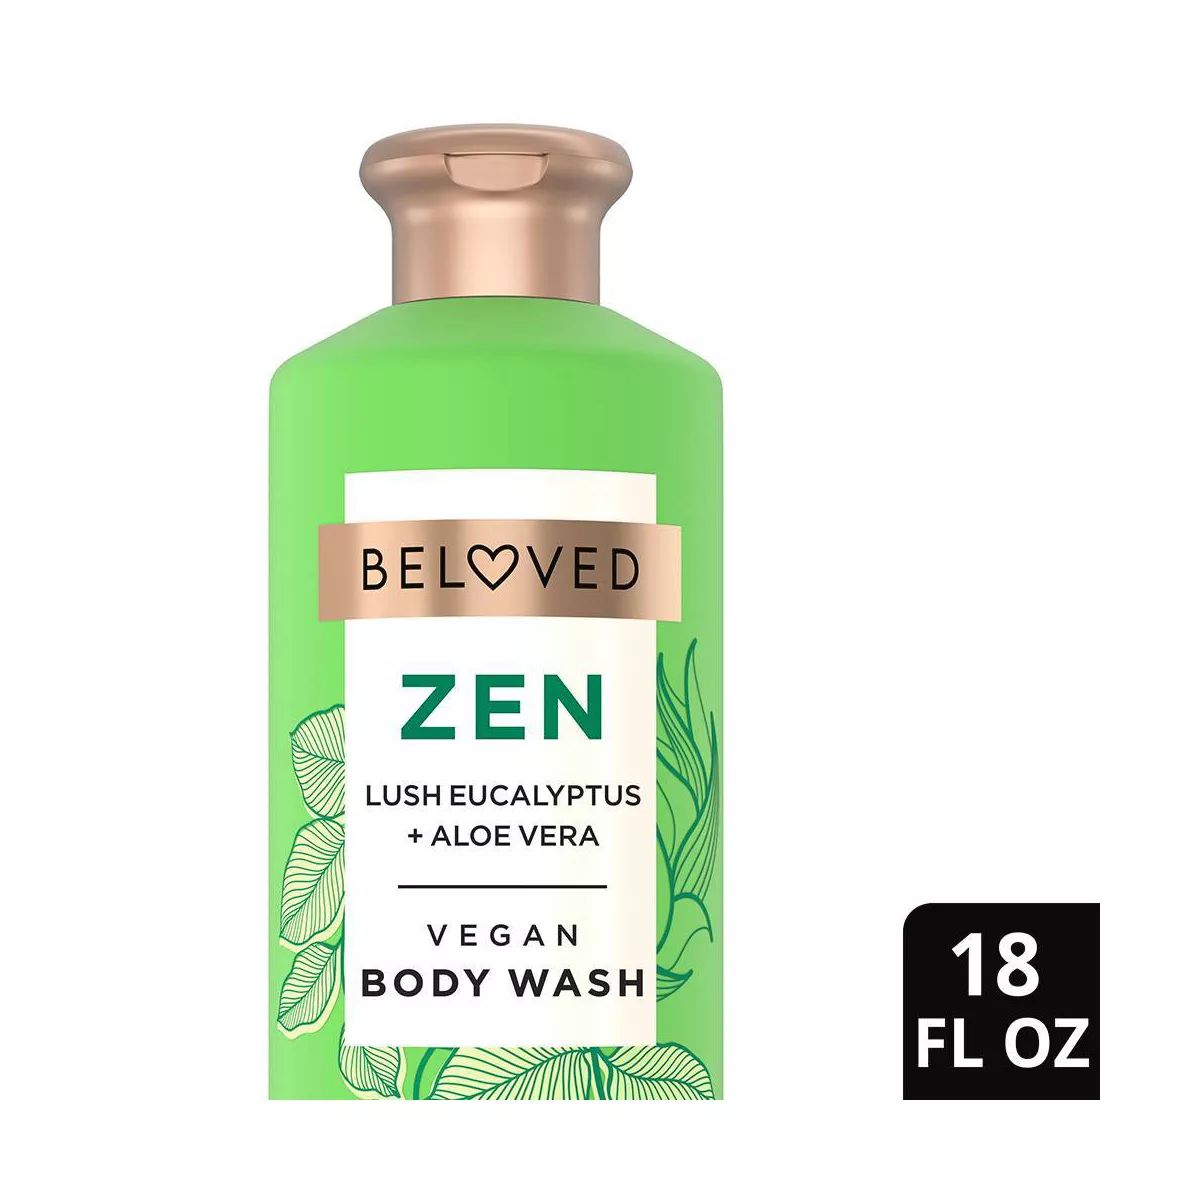 Beloved Zen Vegan Body Wash with Lush Eucalyptus & Aloe Vera - 18 fl oz | Target